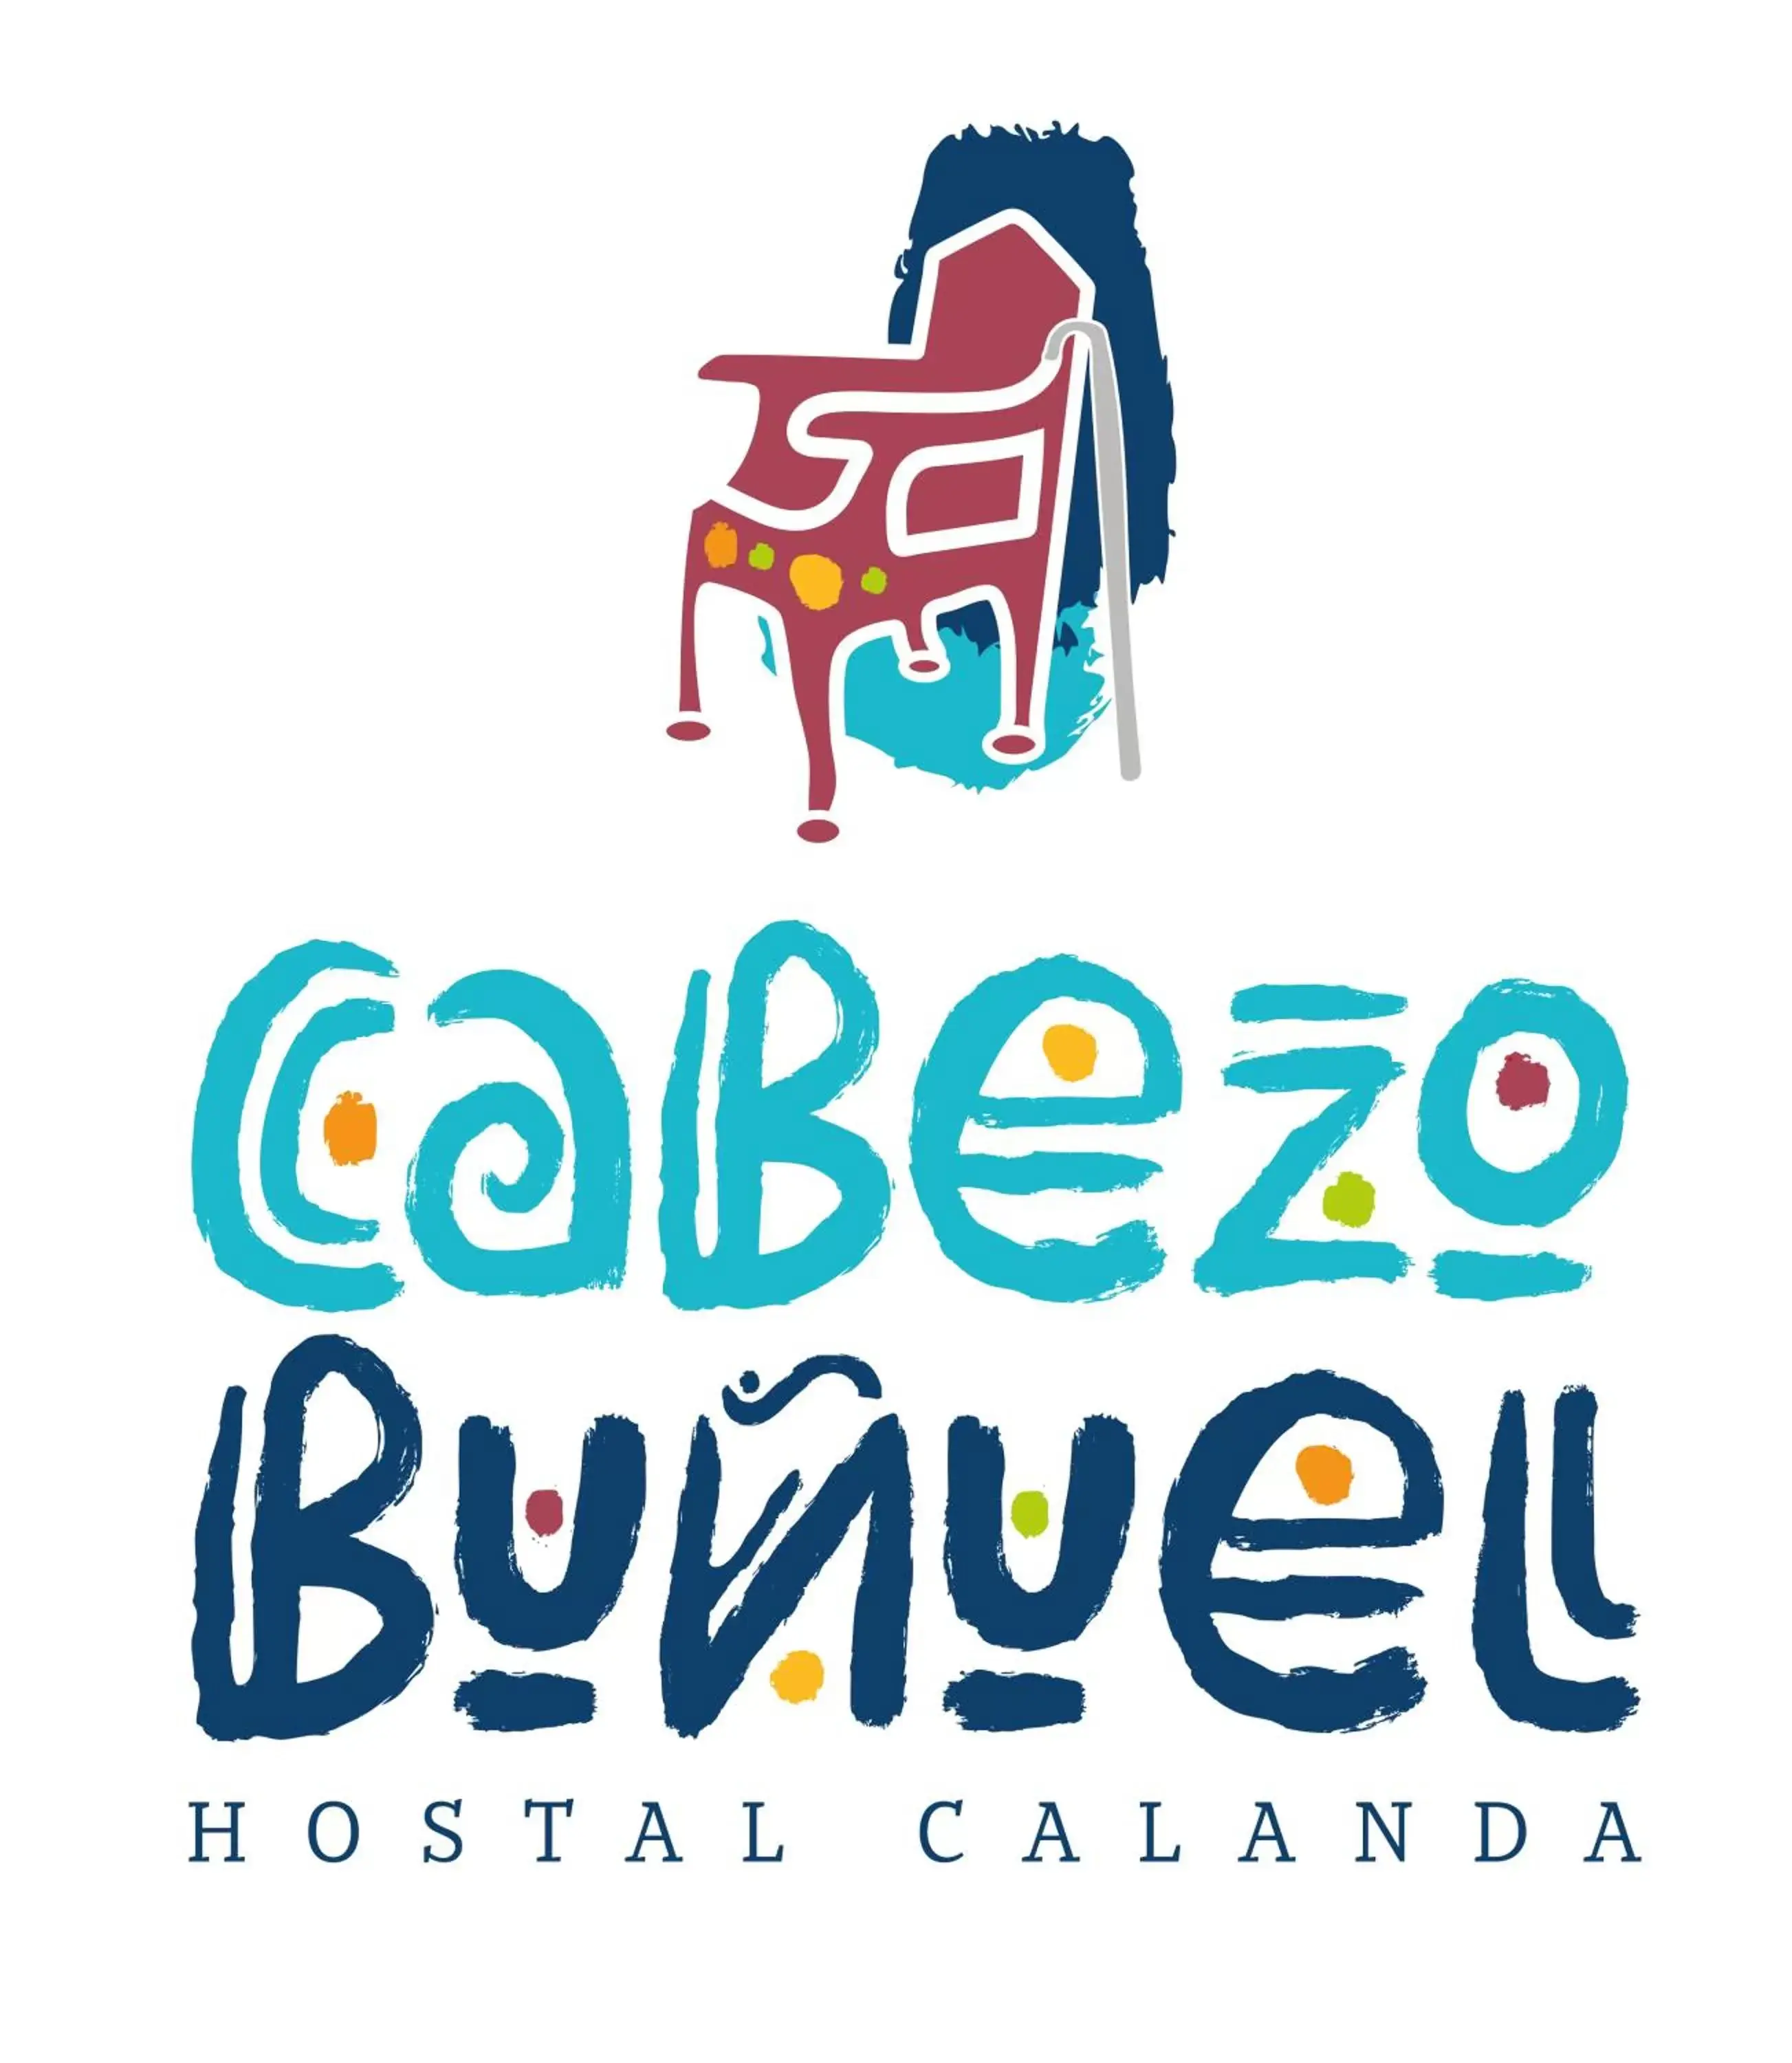 Property logo or sign, Property Logo/Sign in Cabezo Buñuel Hostal